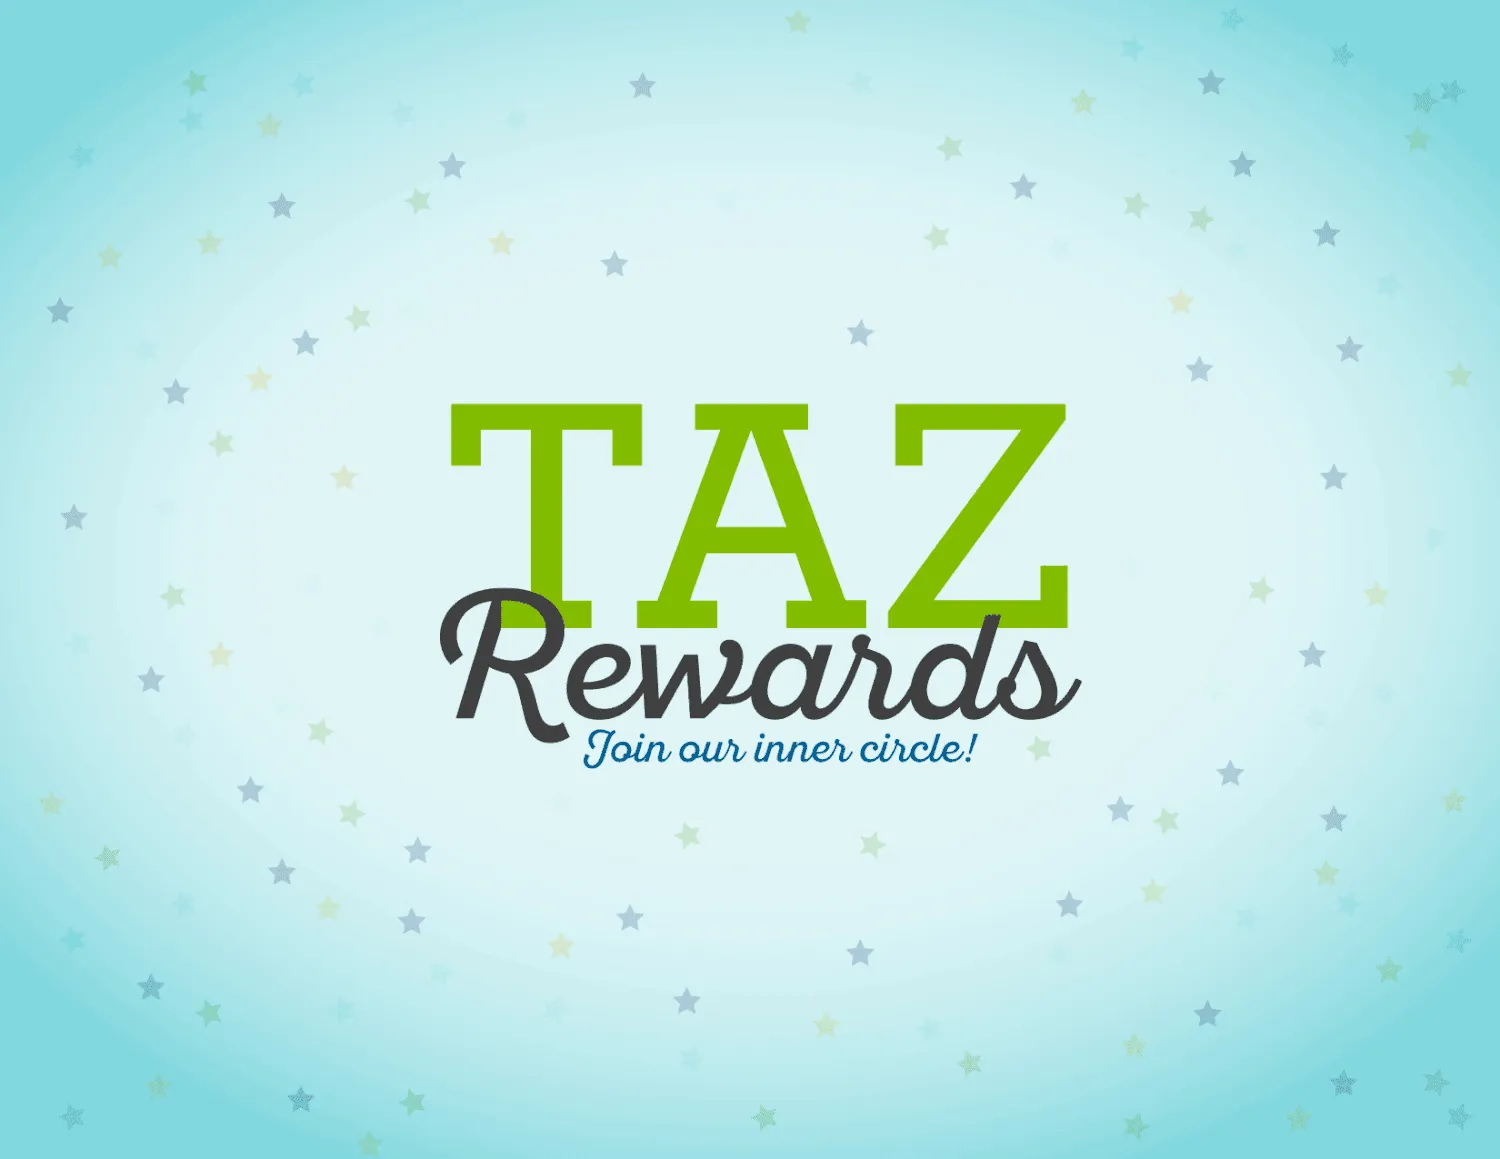 Taz Rewards